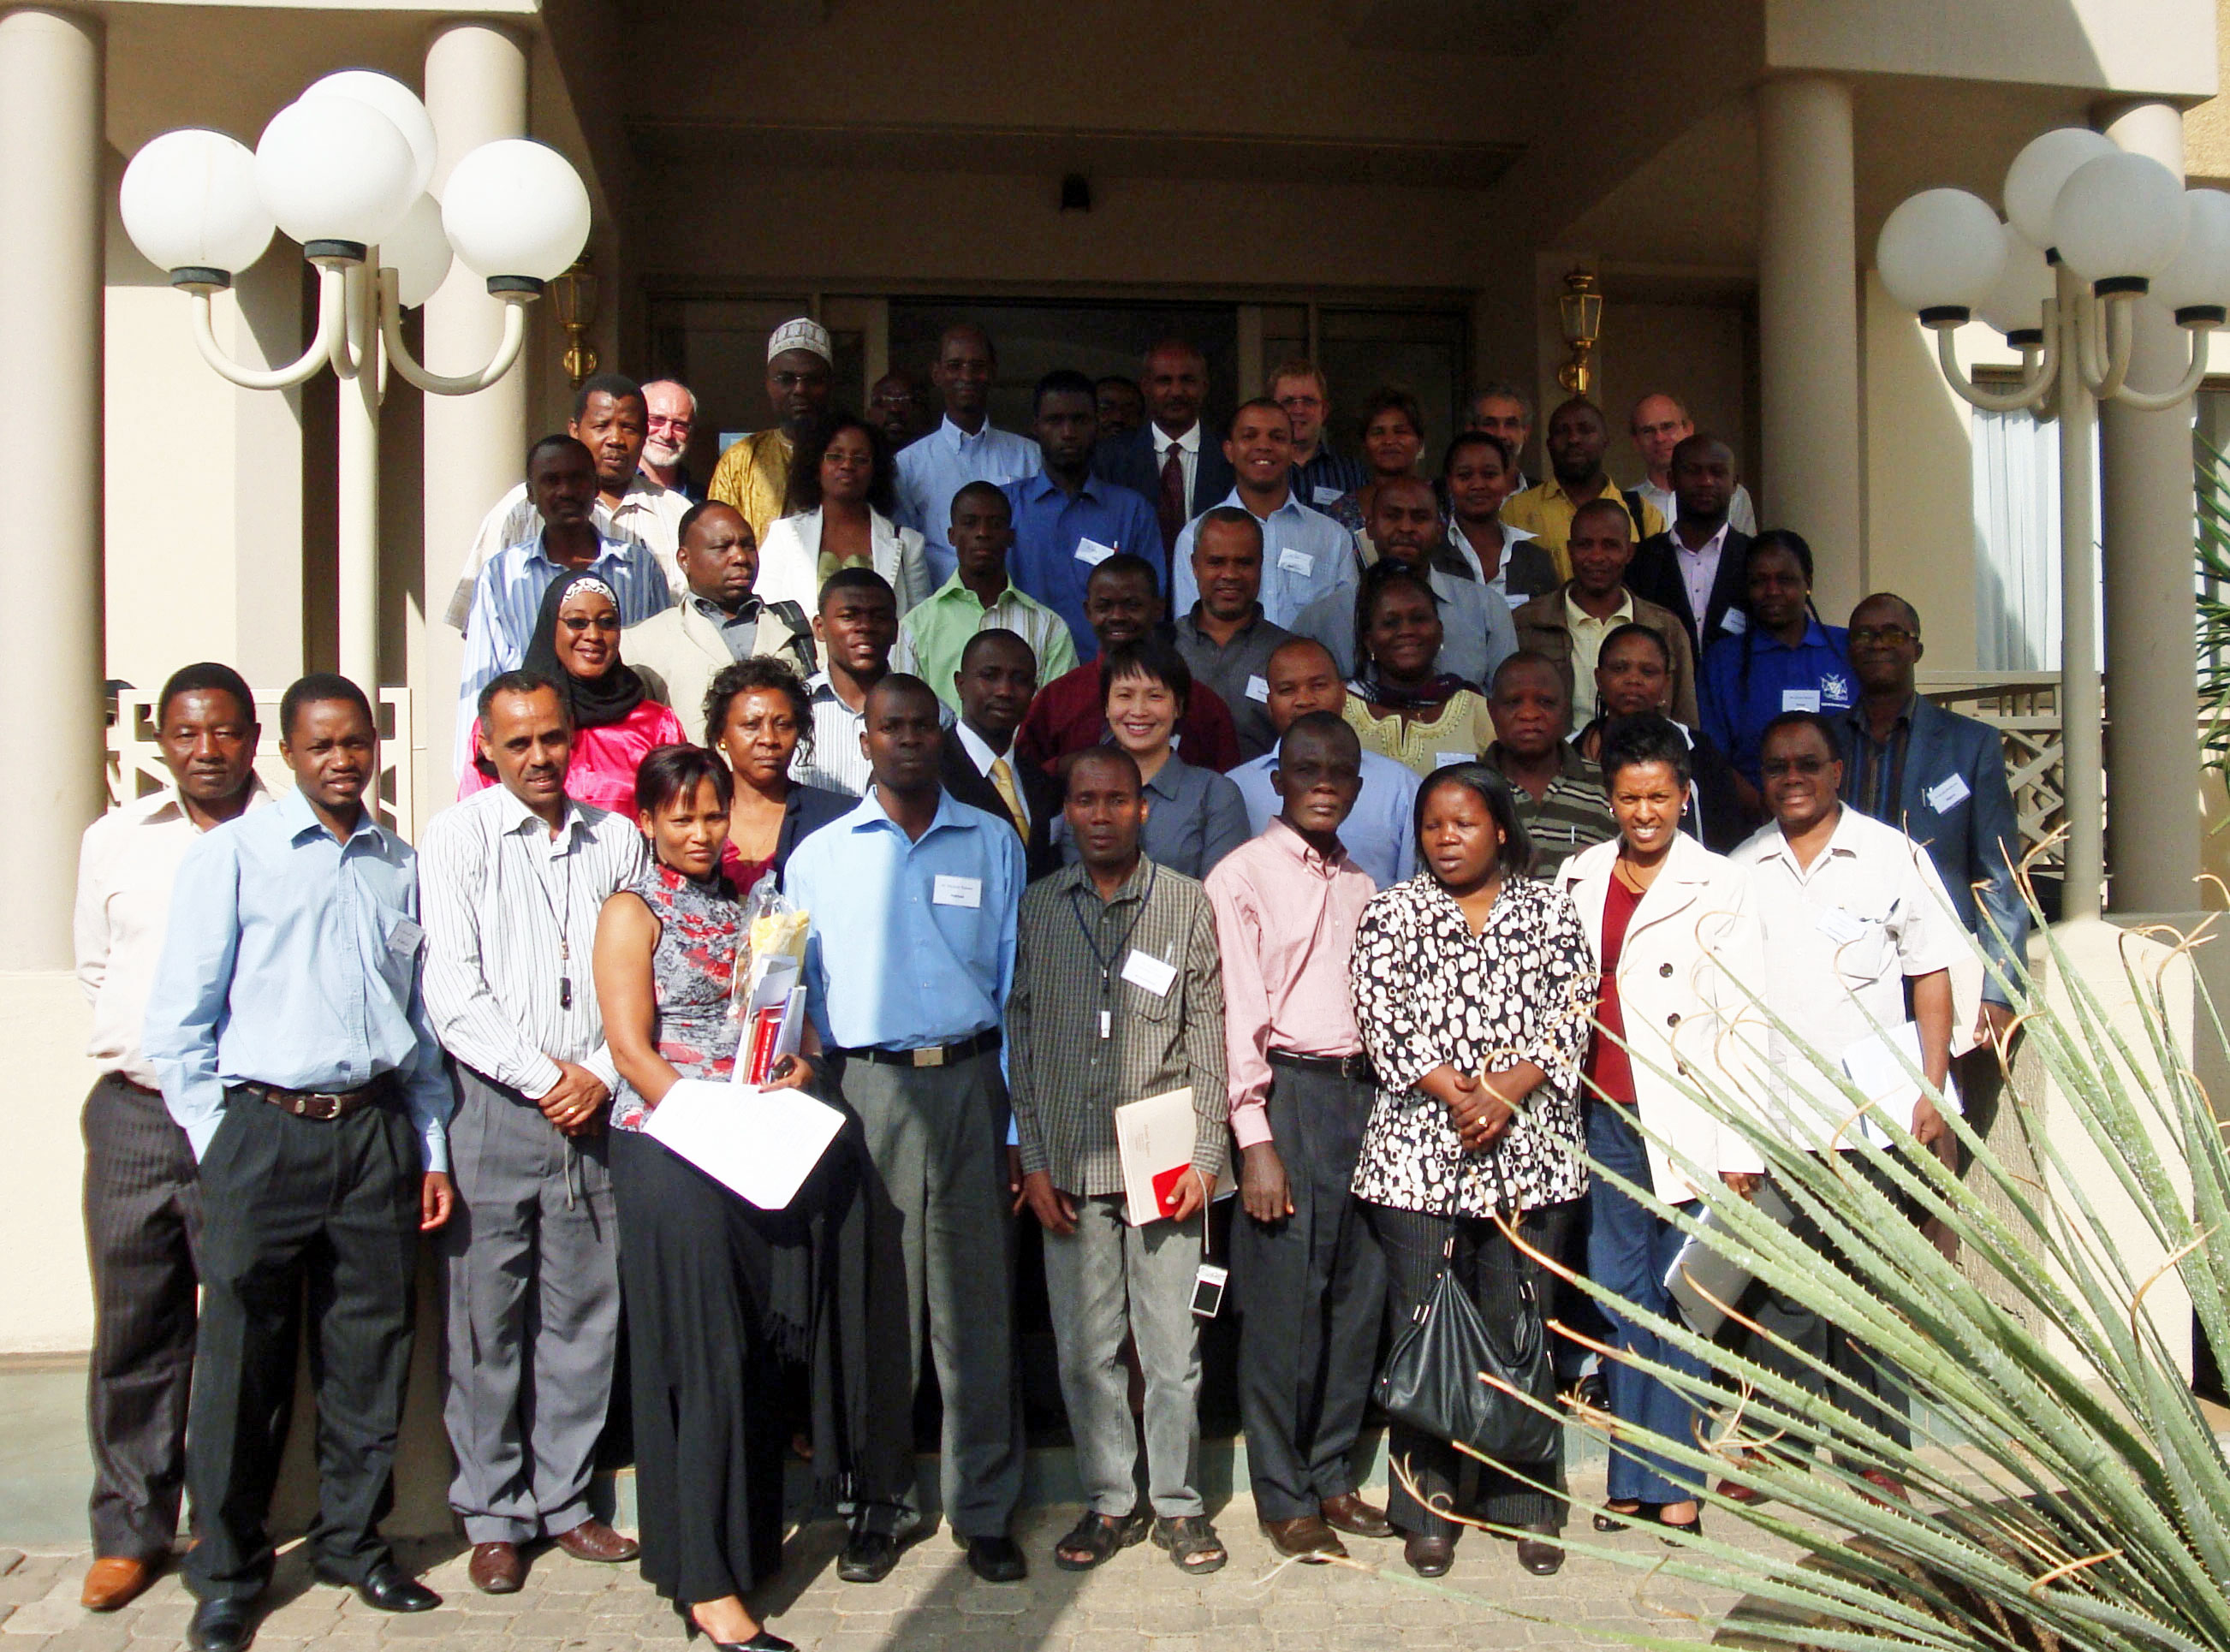 Workshop participants in Windhoek, Nambia